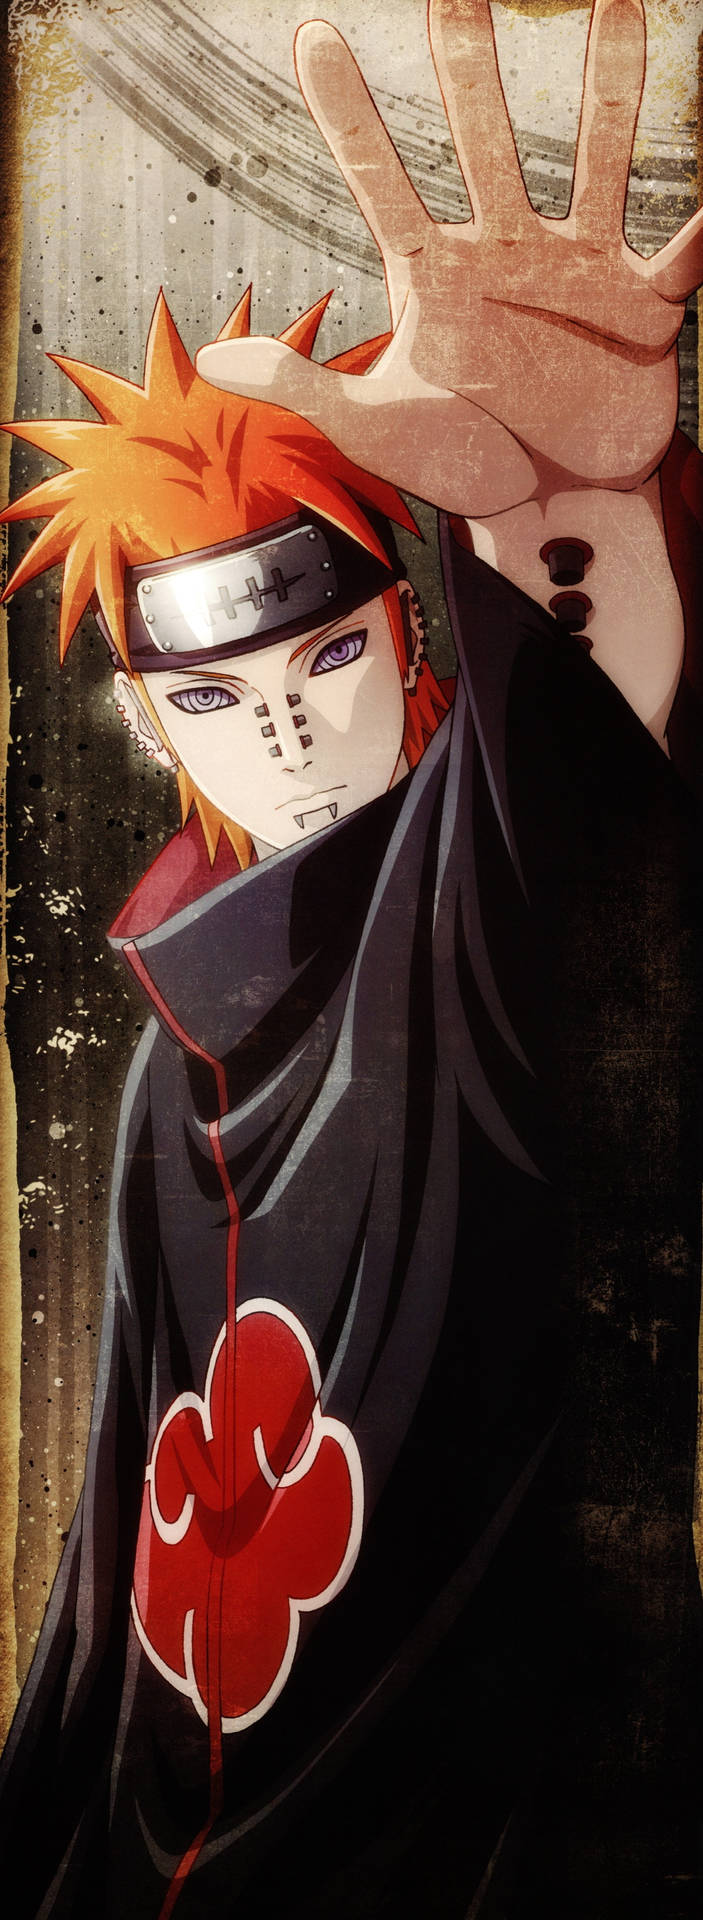 Caption: Immortal Nagato in Vivid 4K – A Snapshot from Naruto Mobile Wallpaper